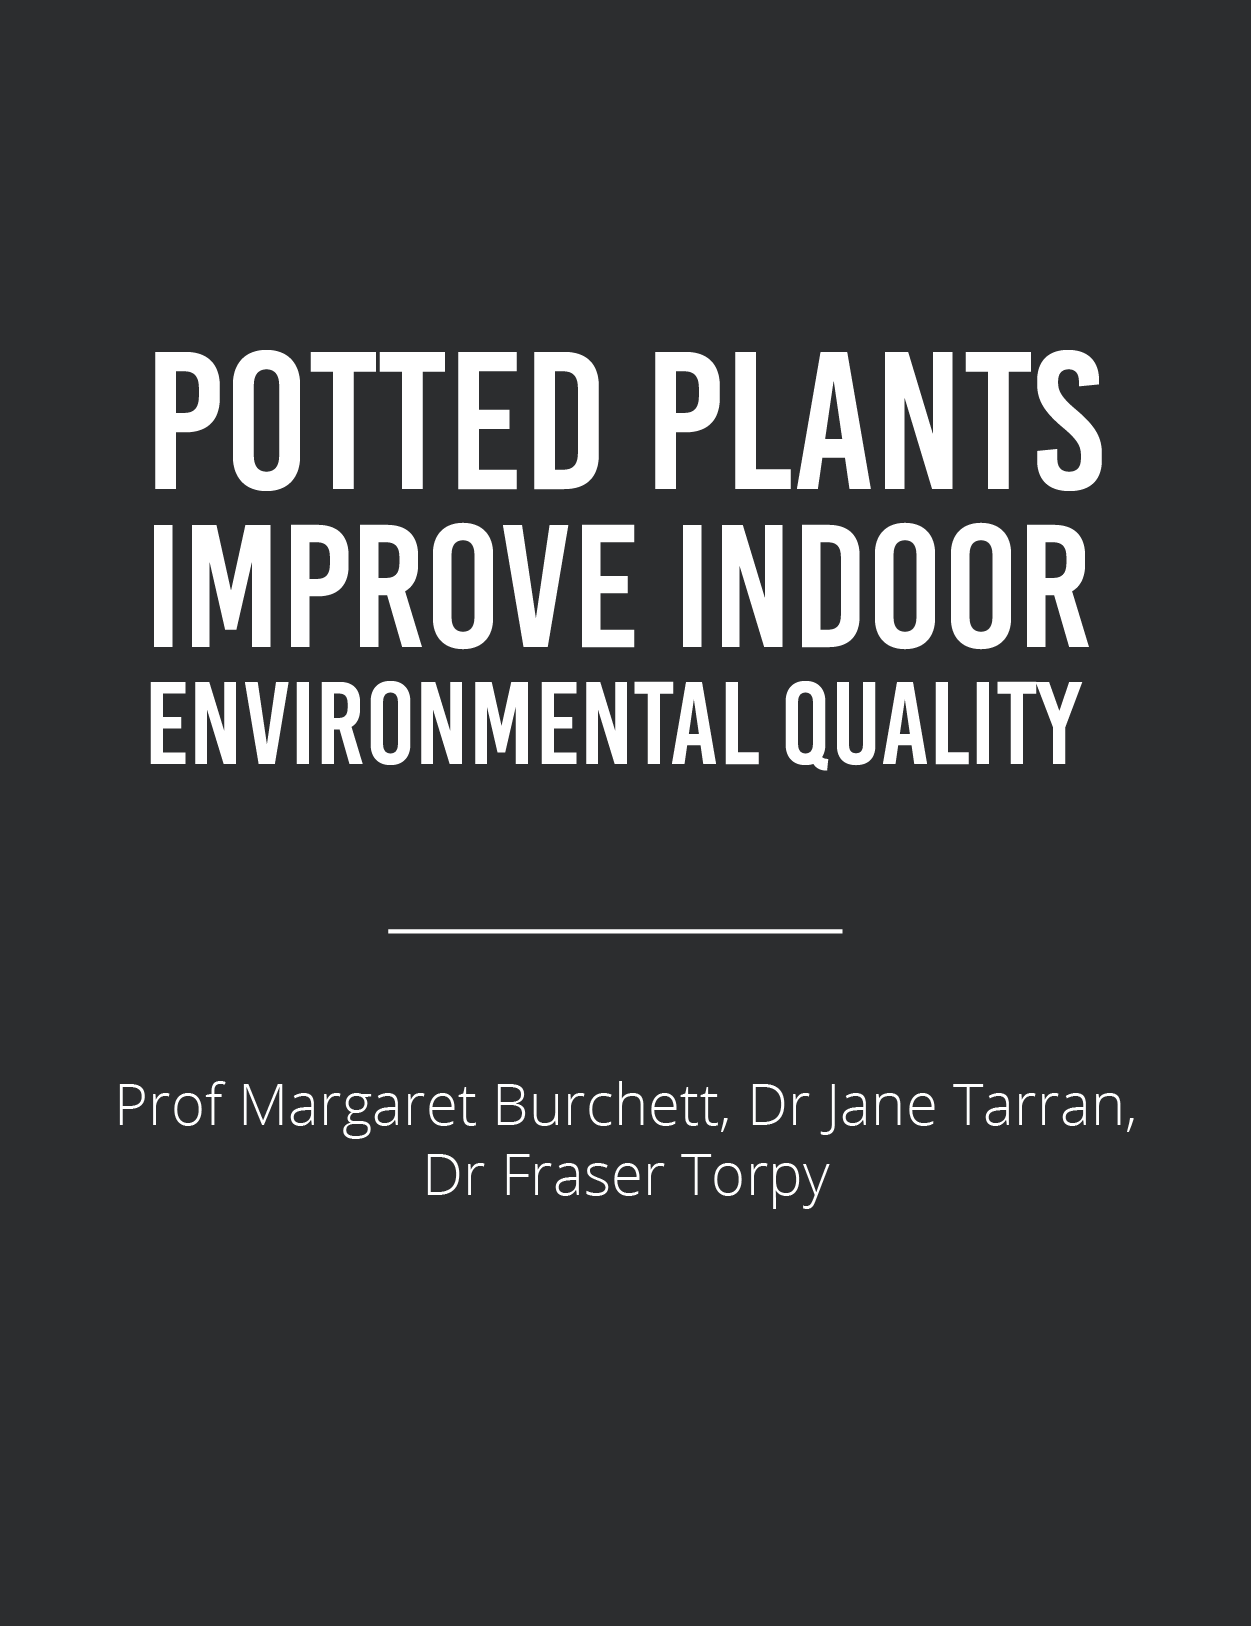 plants improve indoor environment